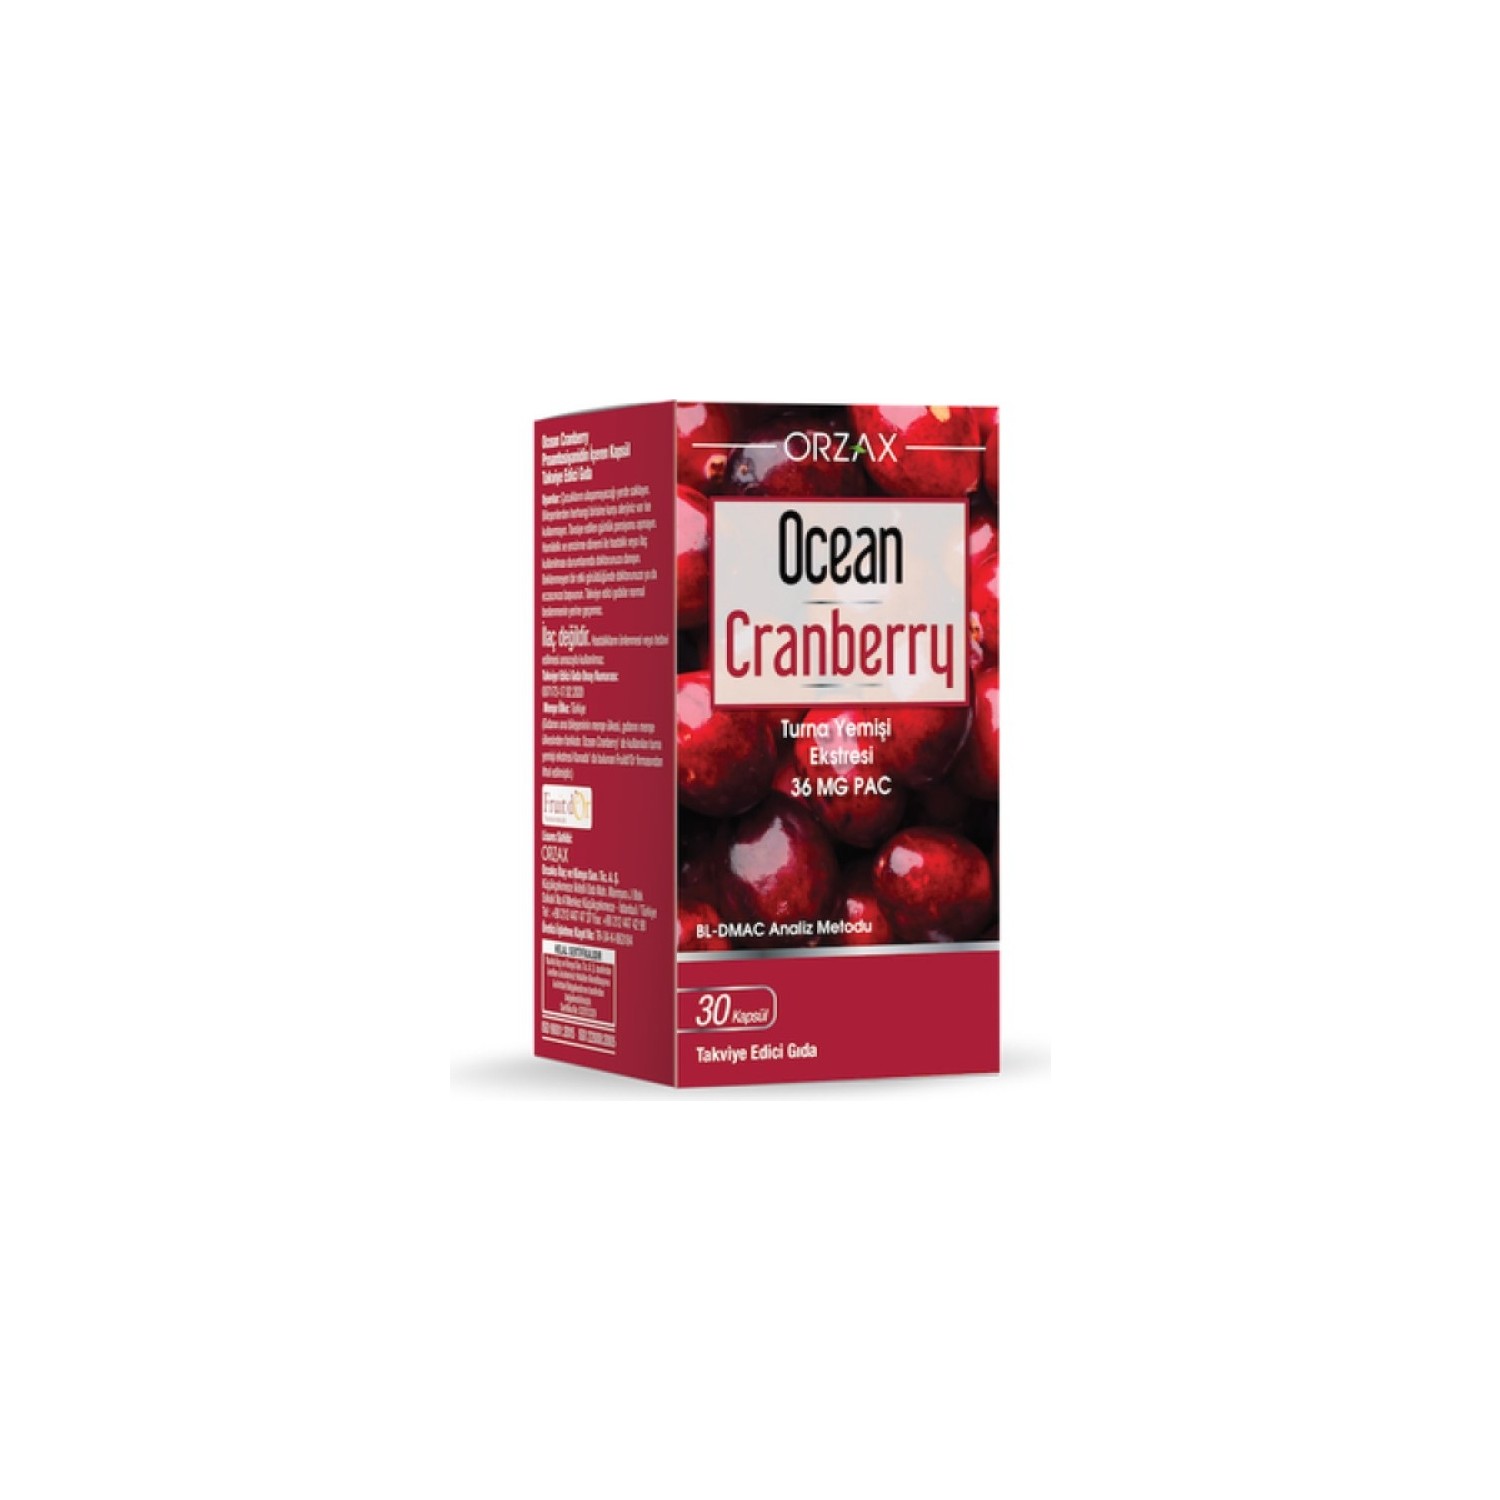 Пищевая добавка Orzax Ocean Cranberry Extract, 30 таблеток пищевая добавка orzax ocean picozinc cinko picolinate 2 упаковки по 30 таблеток